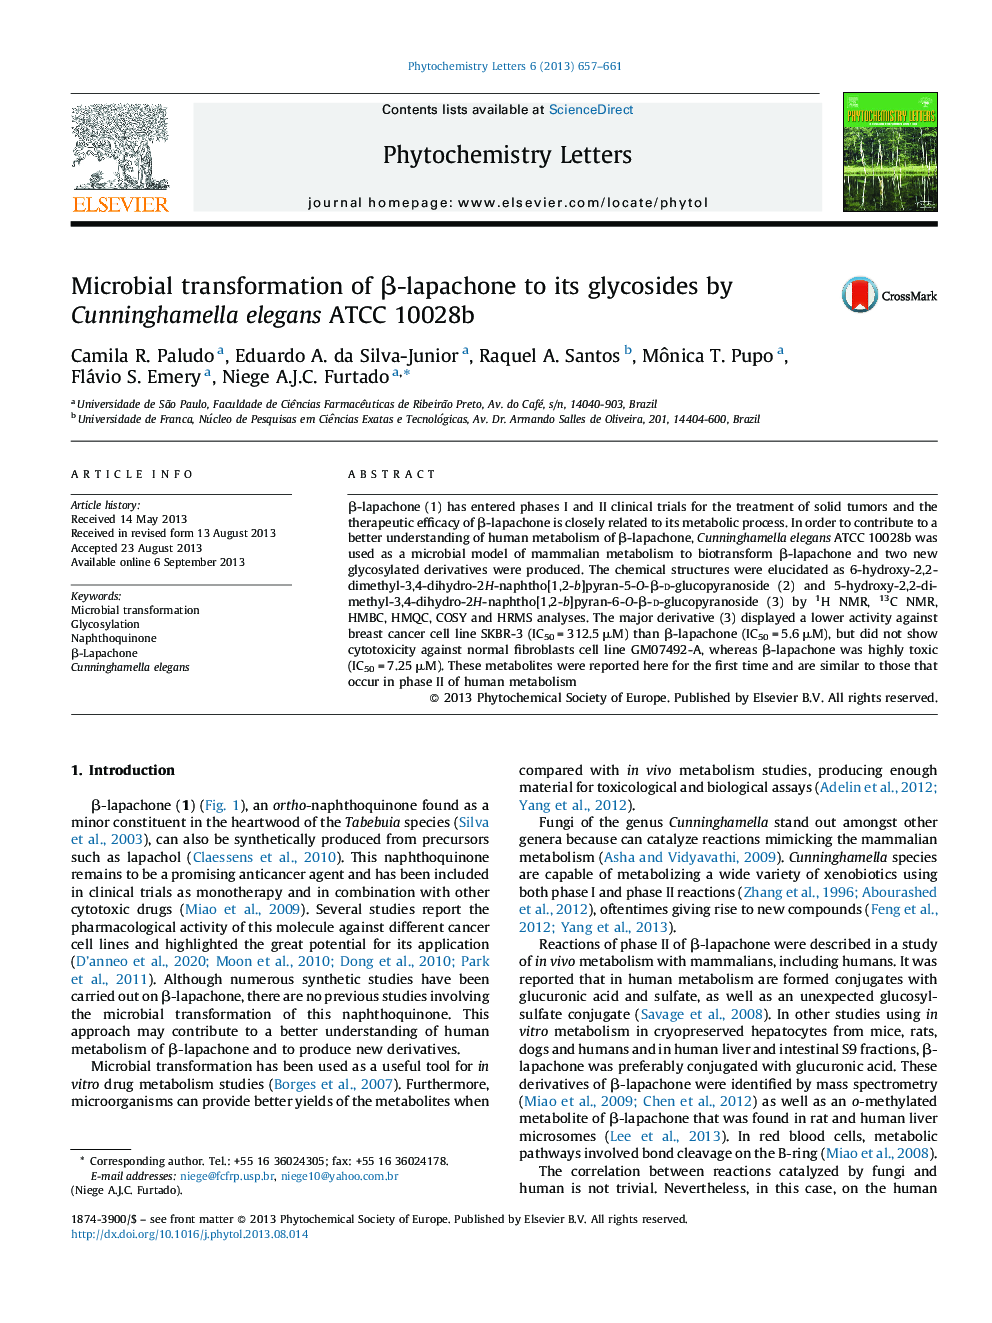 Microbial transformation of Î²-lapachone to its glycosides by Cunninghamella elegans ATCC 10028b